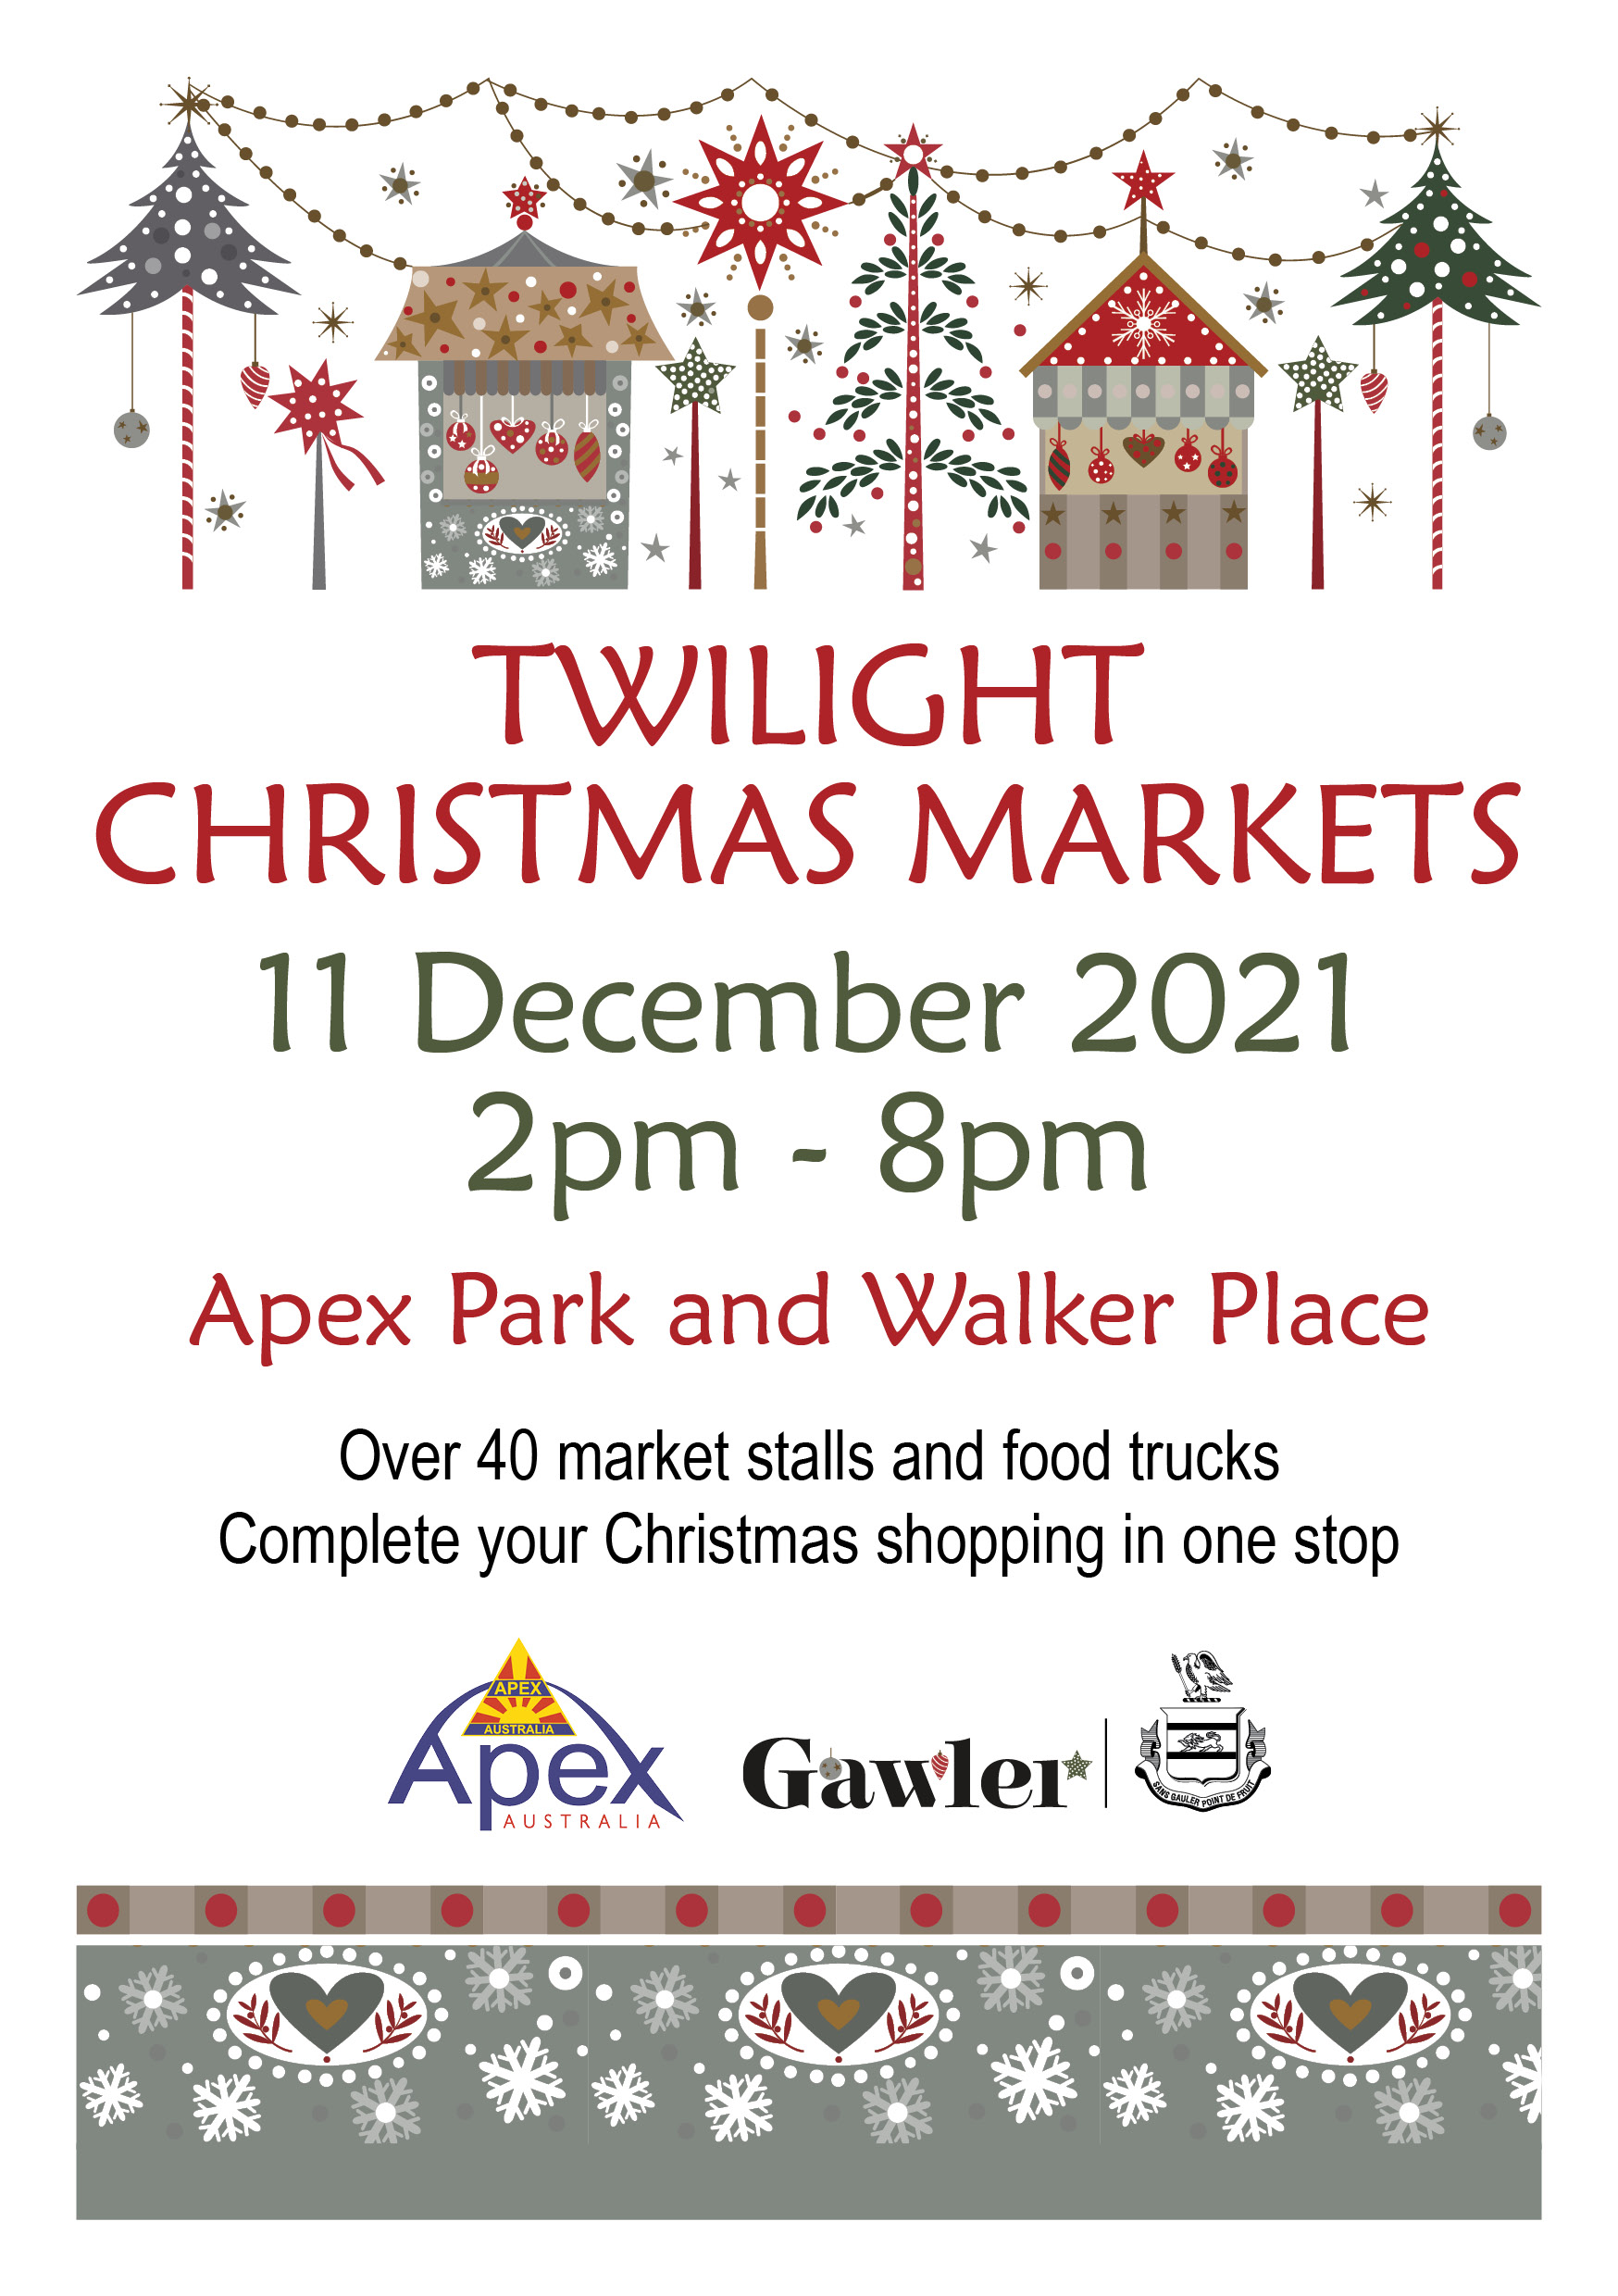 Gawler Apex Christmas Markets Poster